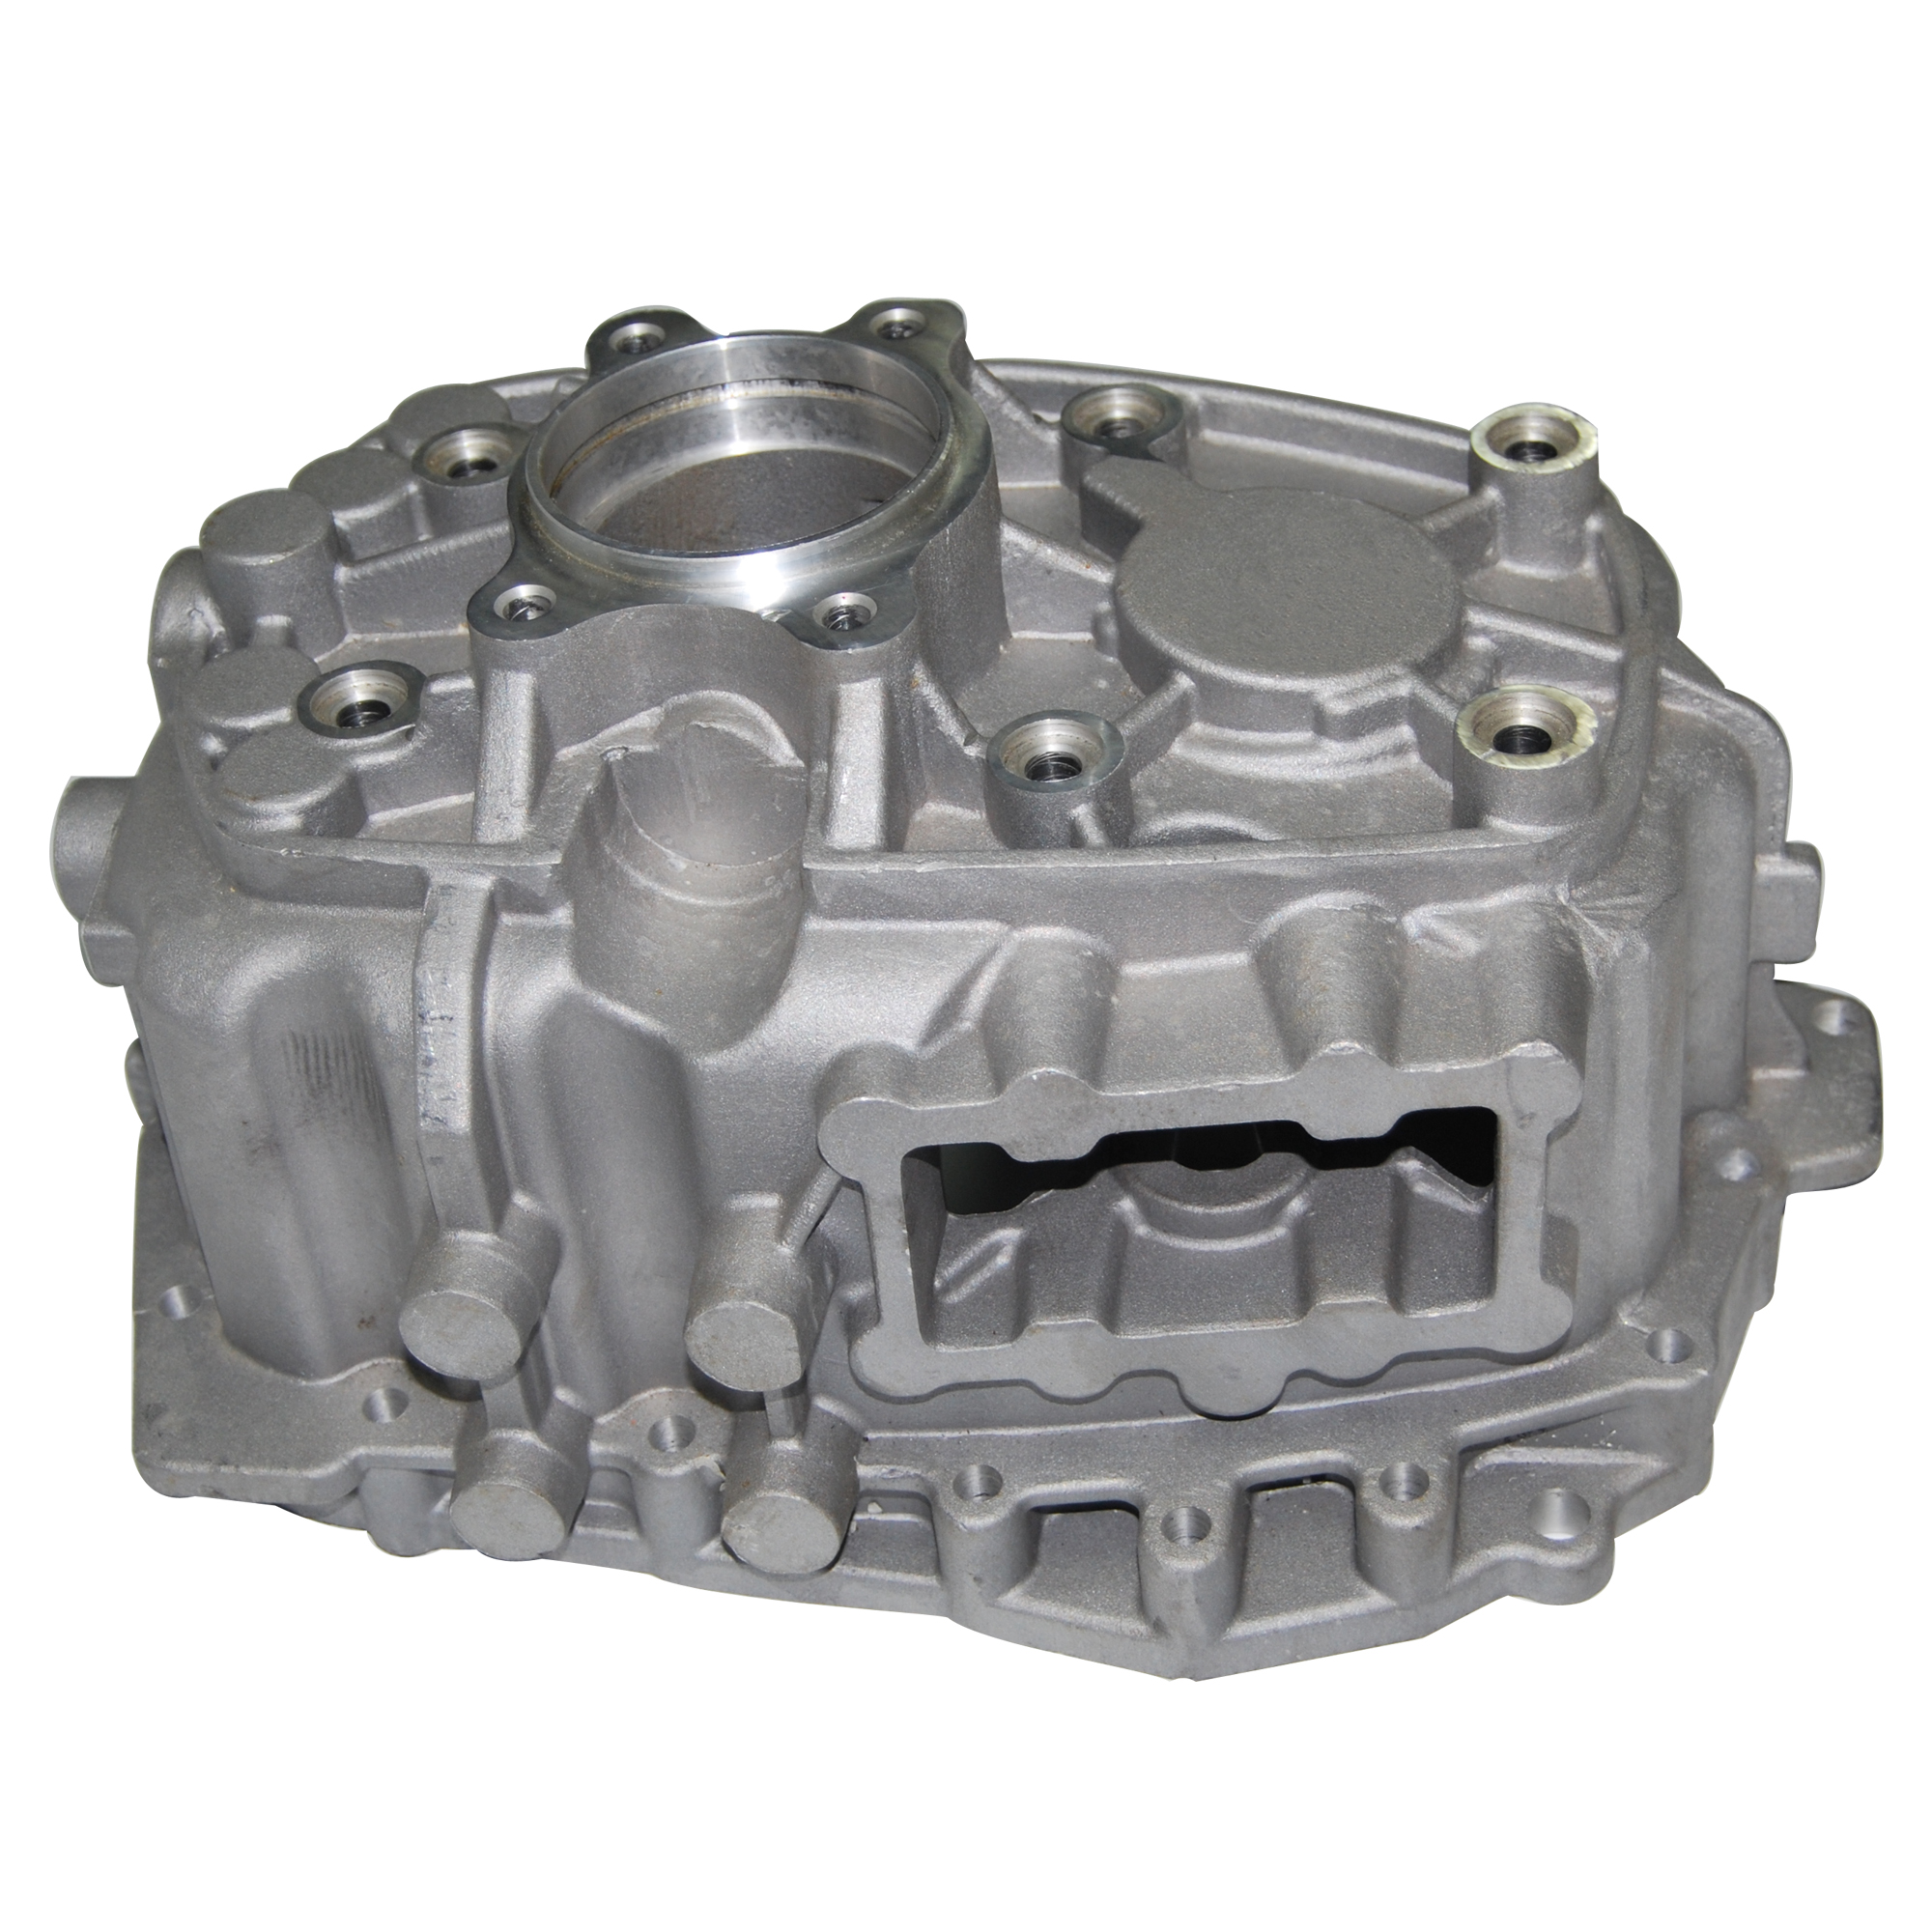 Matech Factory Custom Aluminum Low Pressure Casting Engine Block Cylinders(图18)